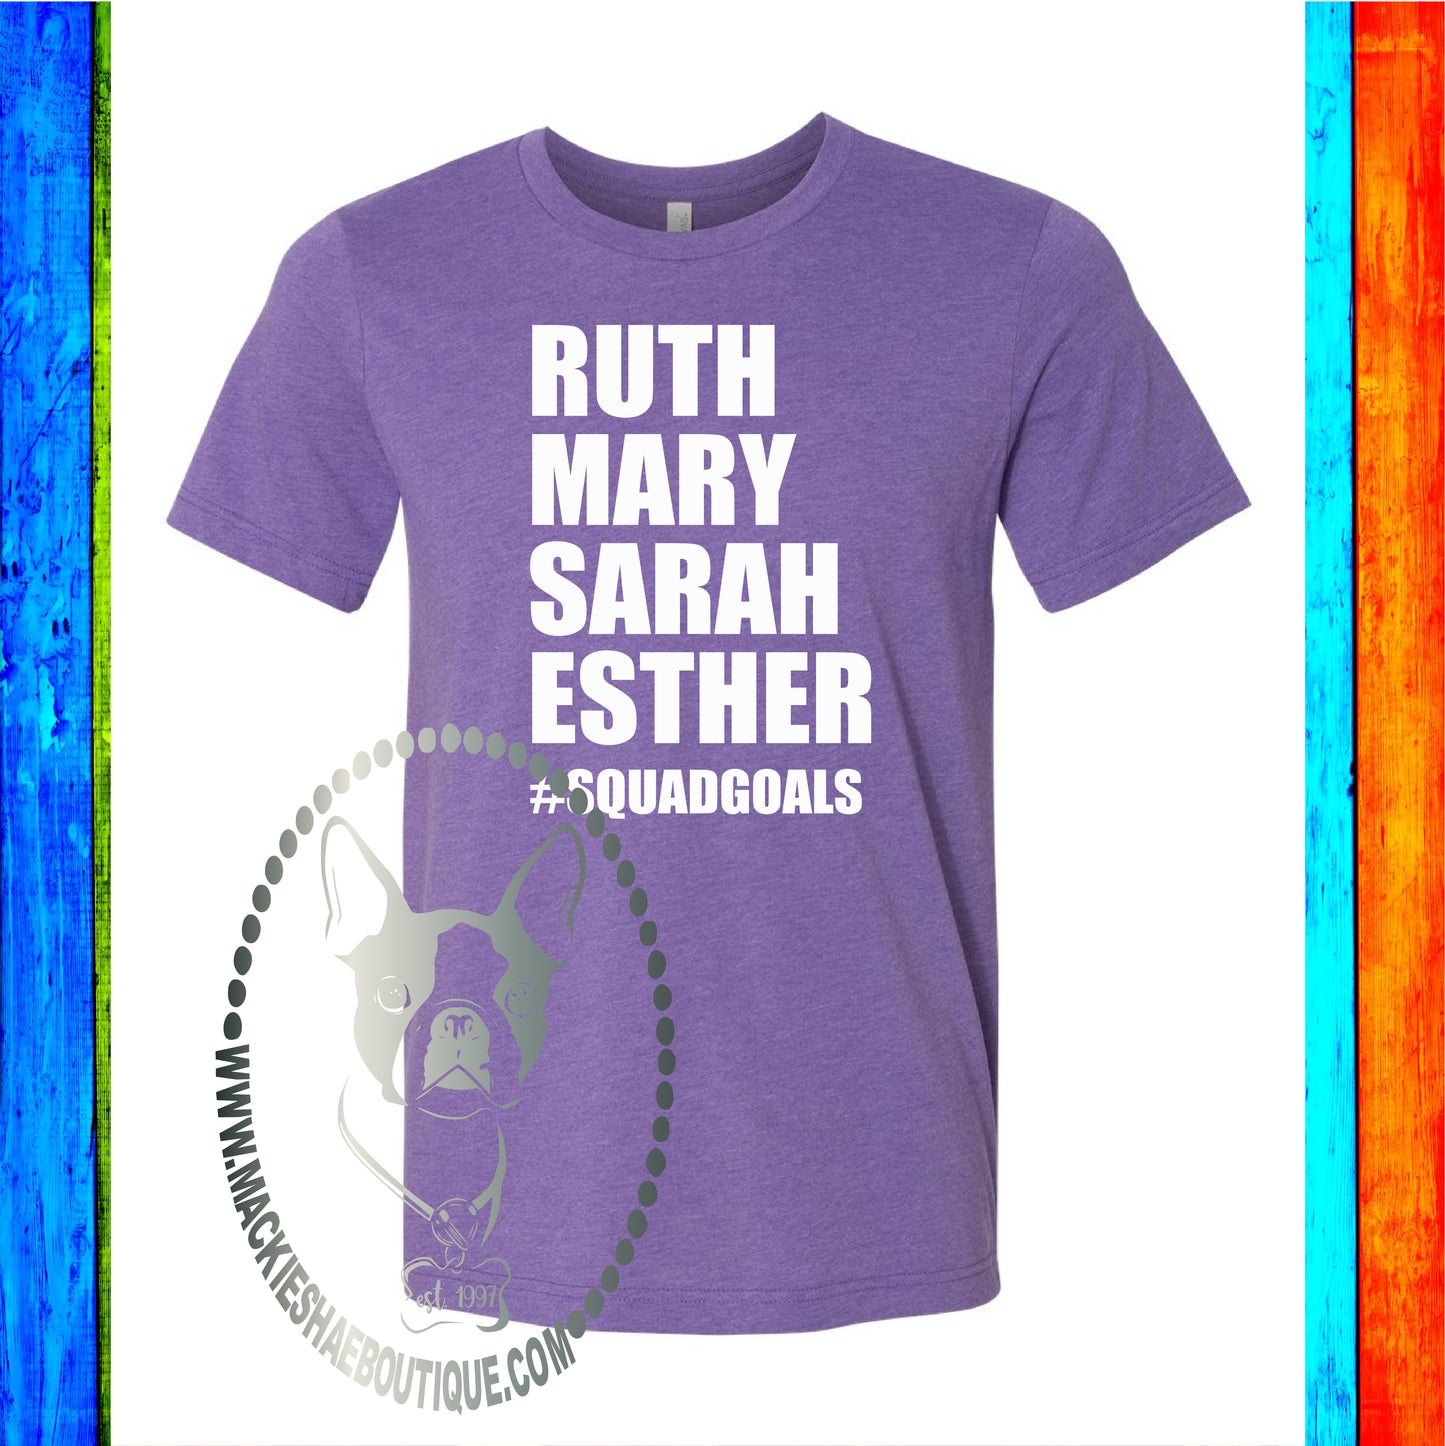 Ruth Mary Sarah Esther #squadgoals Custom Shirt, Soft Short Sleeve